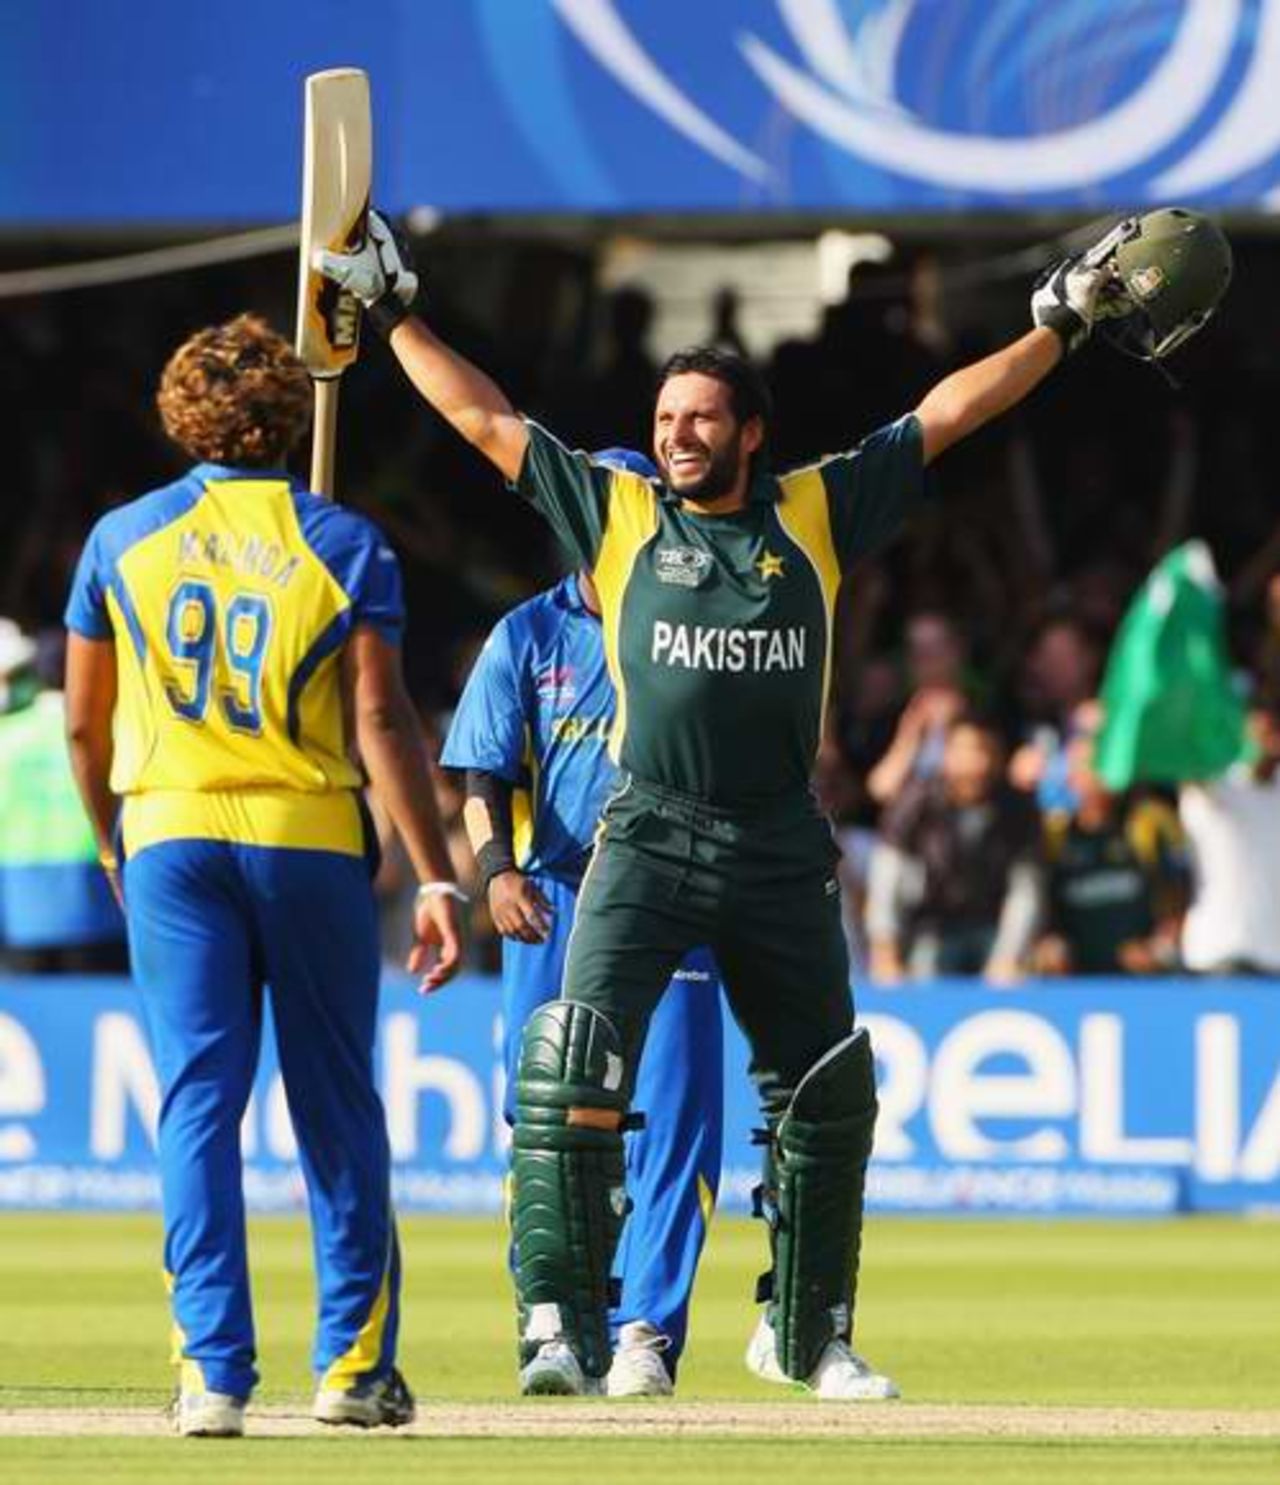 Shahid Afridi celebrates after hitting the winning run, as Lasith Malinga looks on, Pakistan v Sri Lanka, ICC World Twenty20 final, Lord's, June 21, 2009 